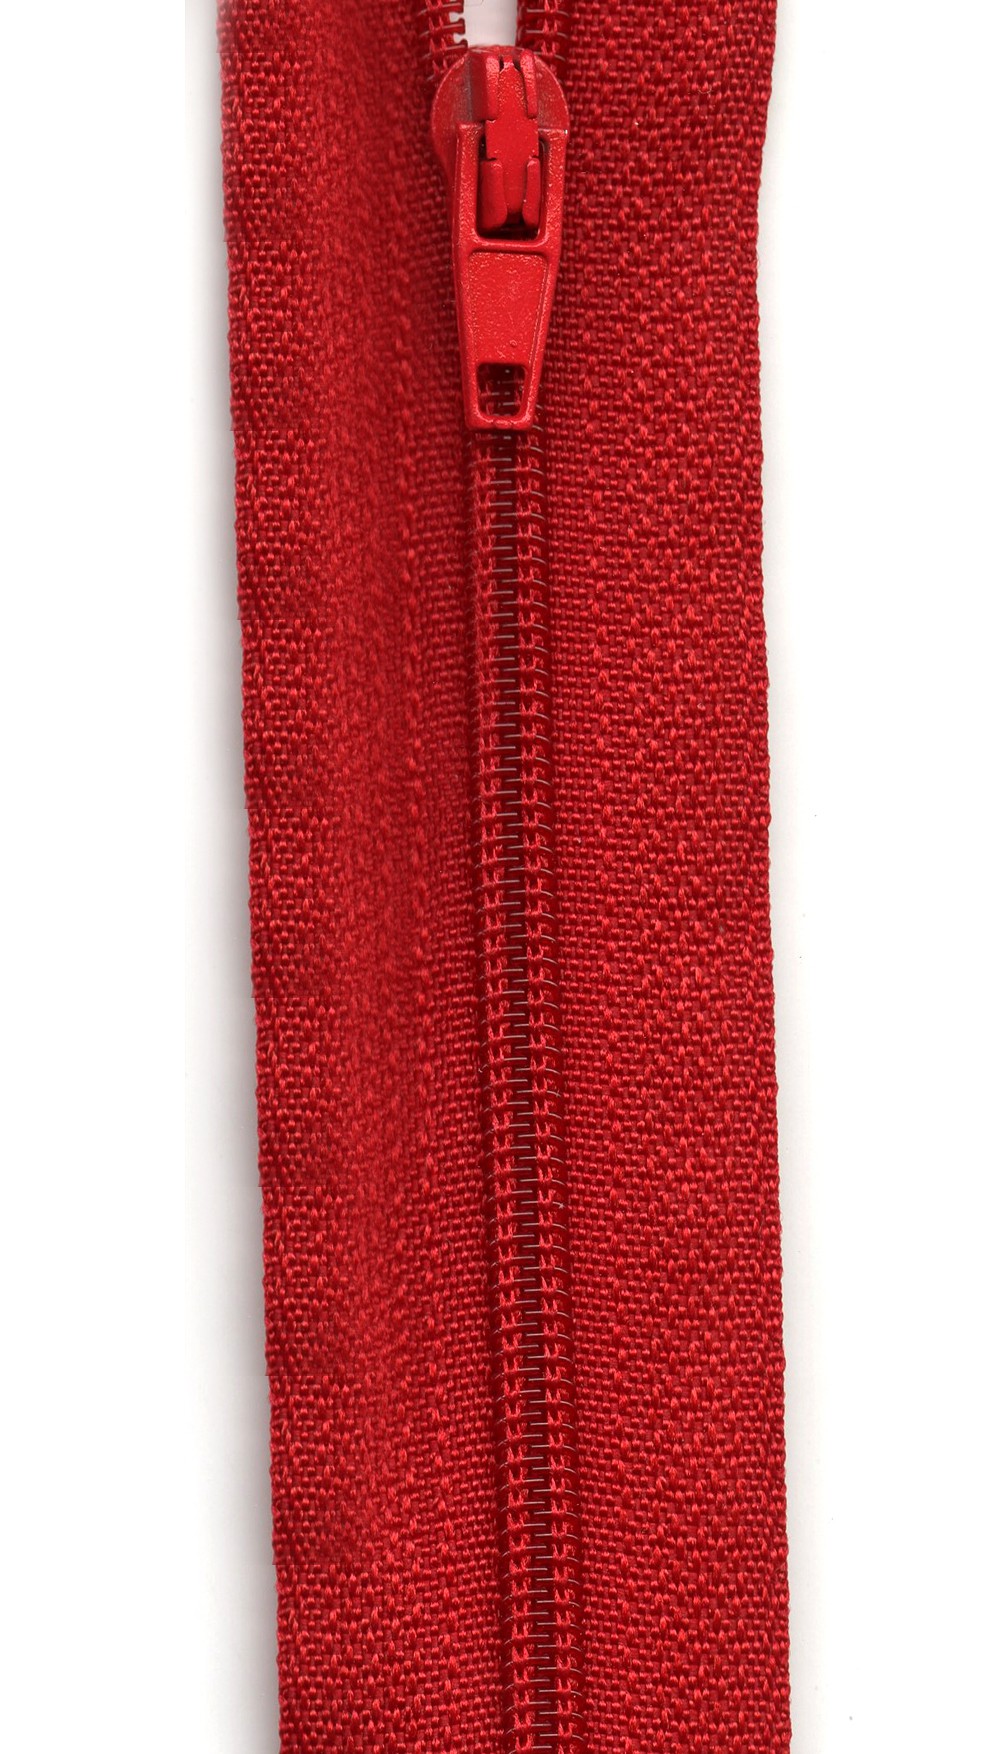 Make A Zipper Regular 55yd 197in Roll And 12 Zipper Pulls Red